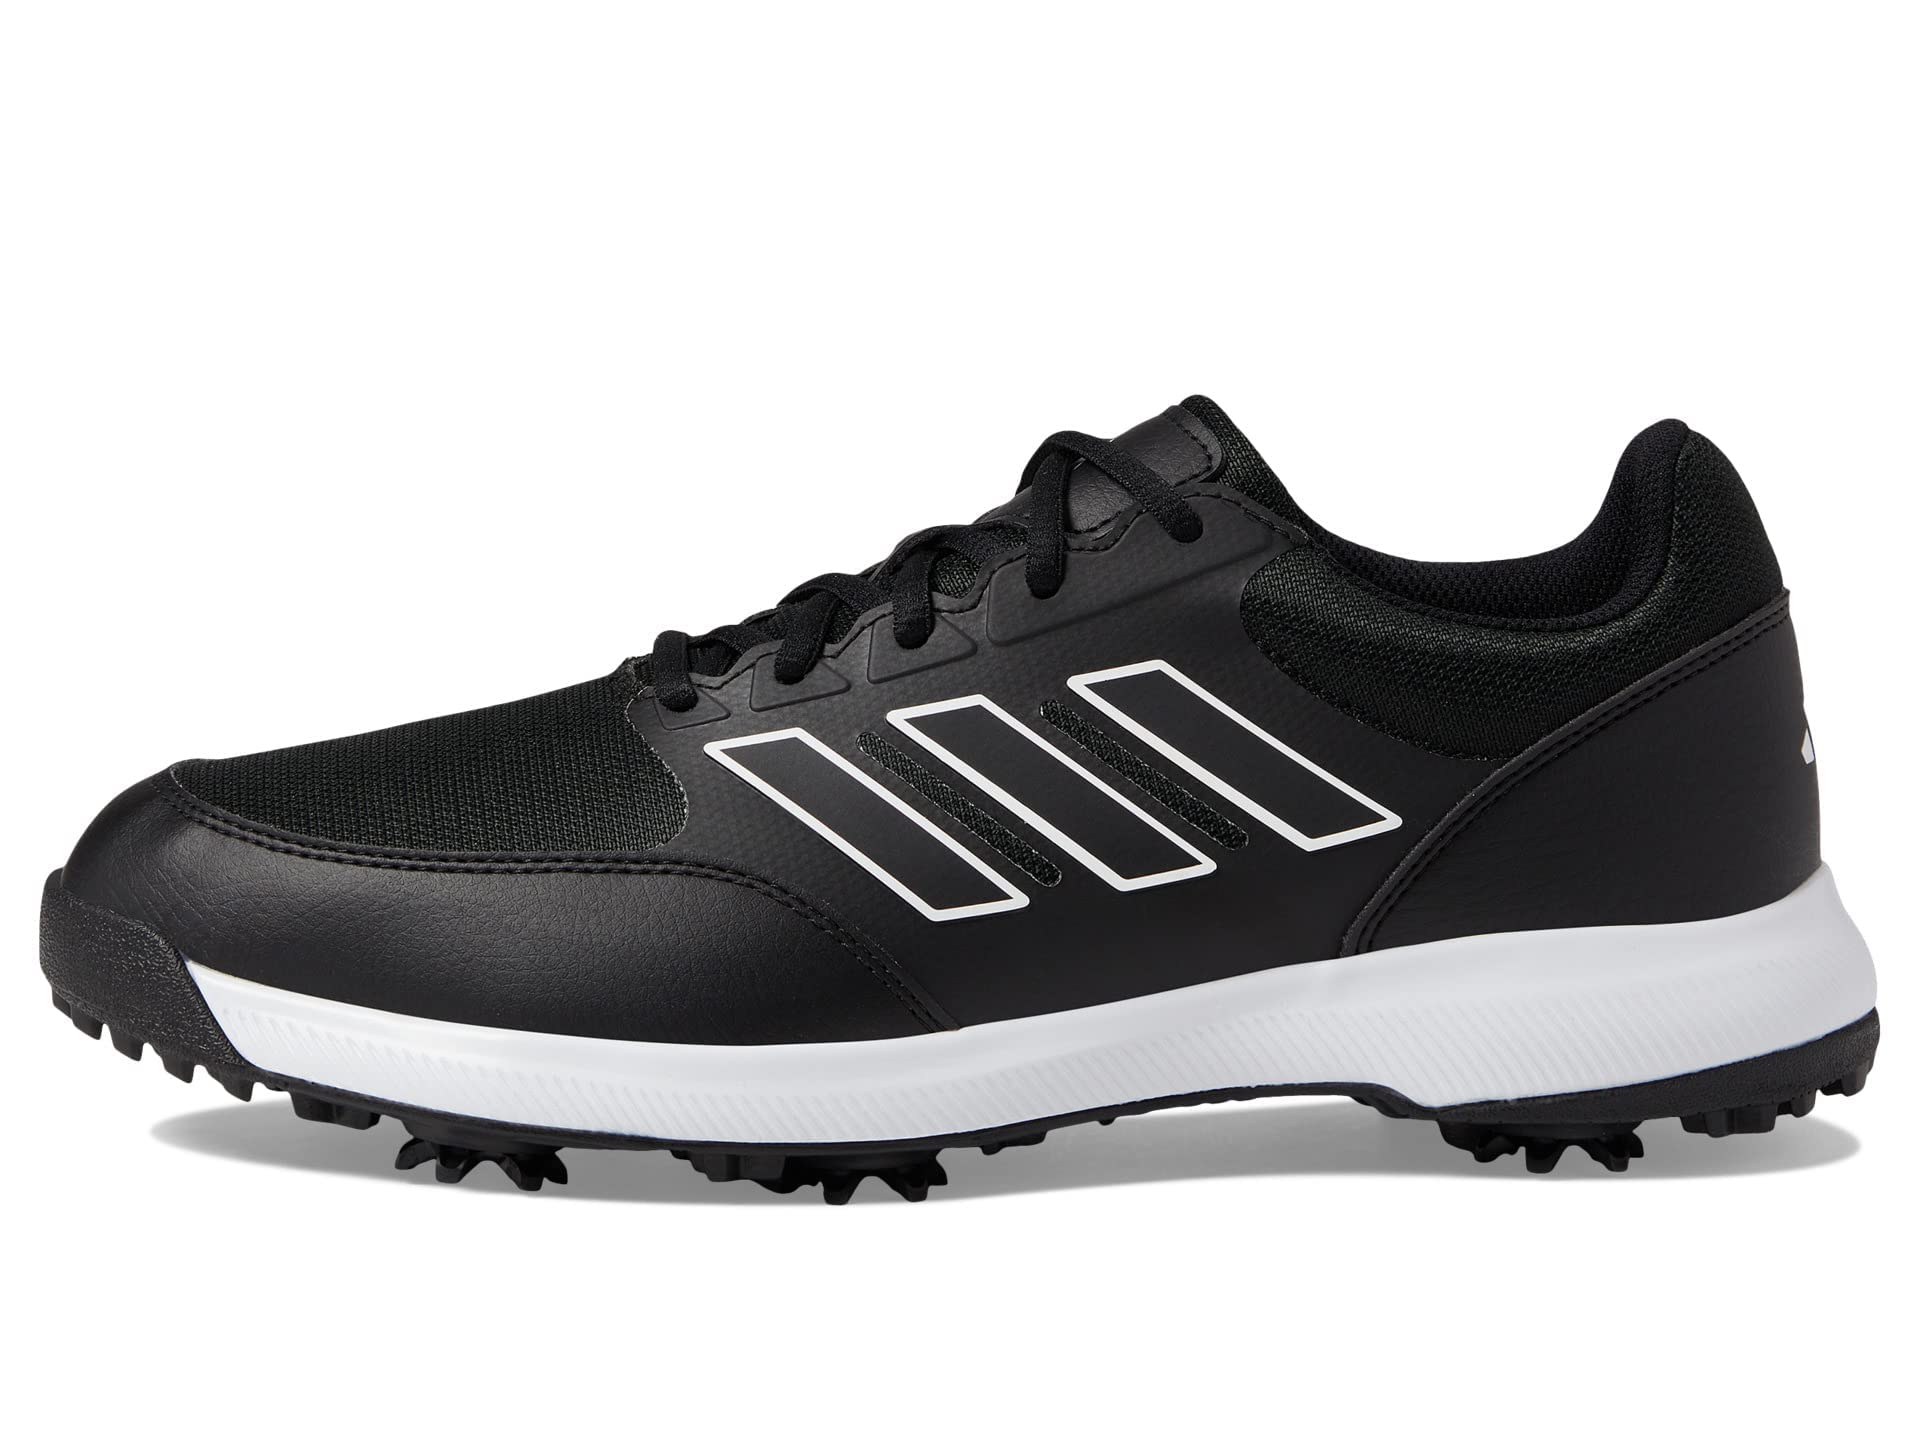 adidas Mens TECH Response 3.0 Golf Shoe core Blackcore BlackFTWR White 10.5 Wide